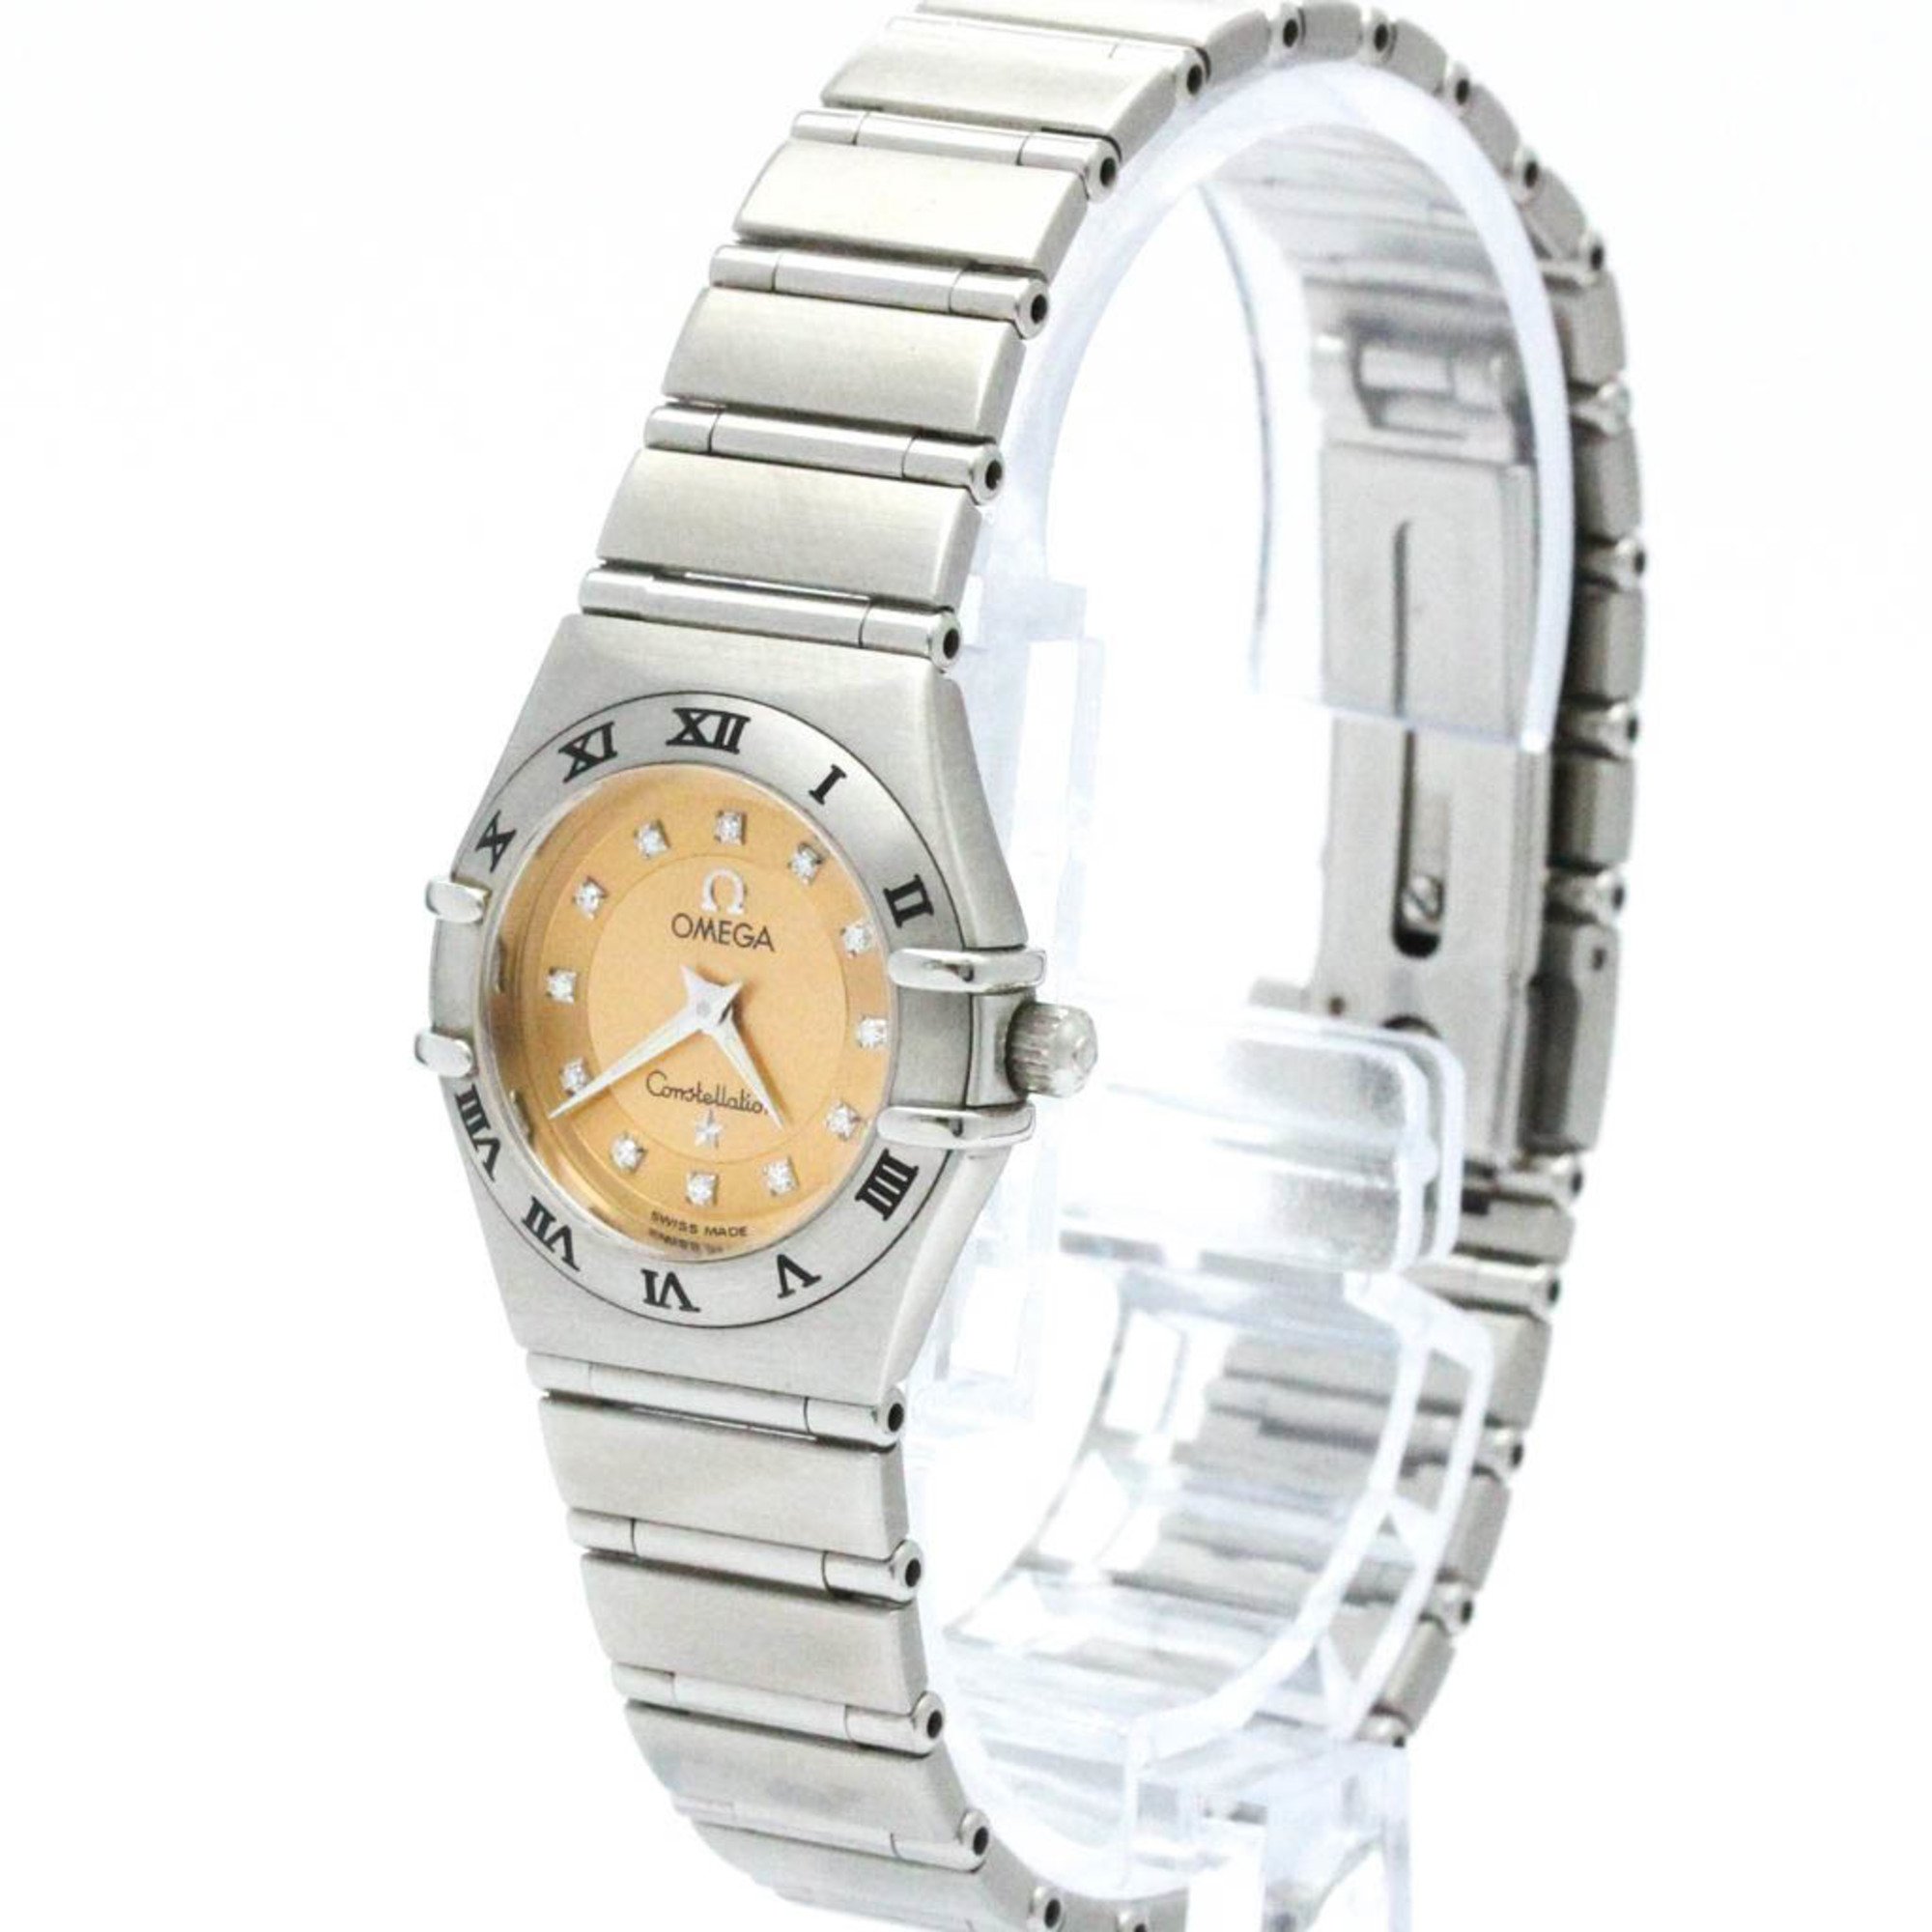 Polished OMEGA Constellation Cindy Crawford Diamond Watch 1564.65 BF572361